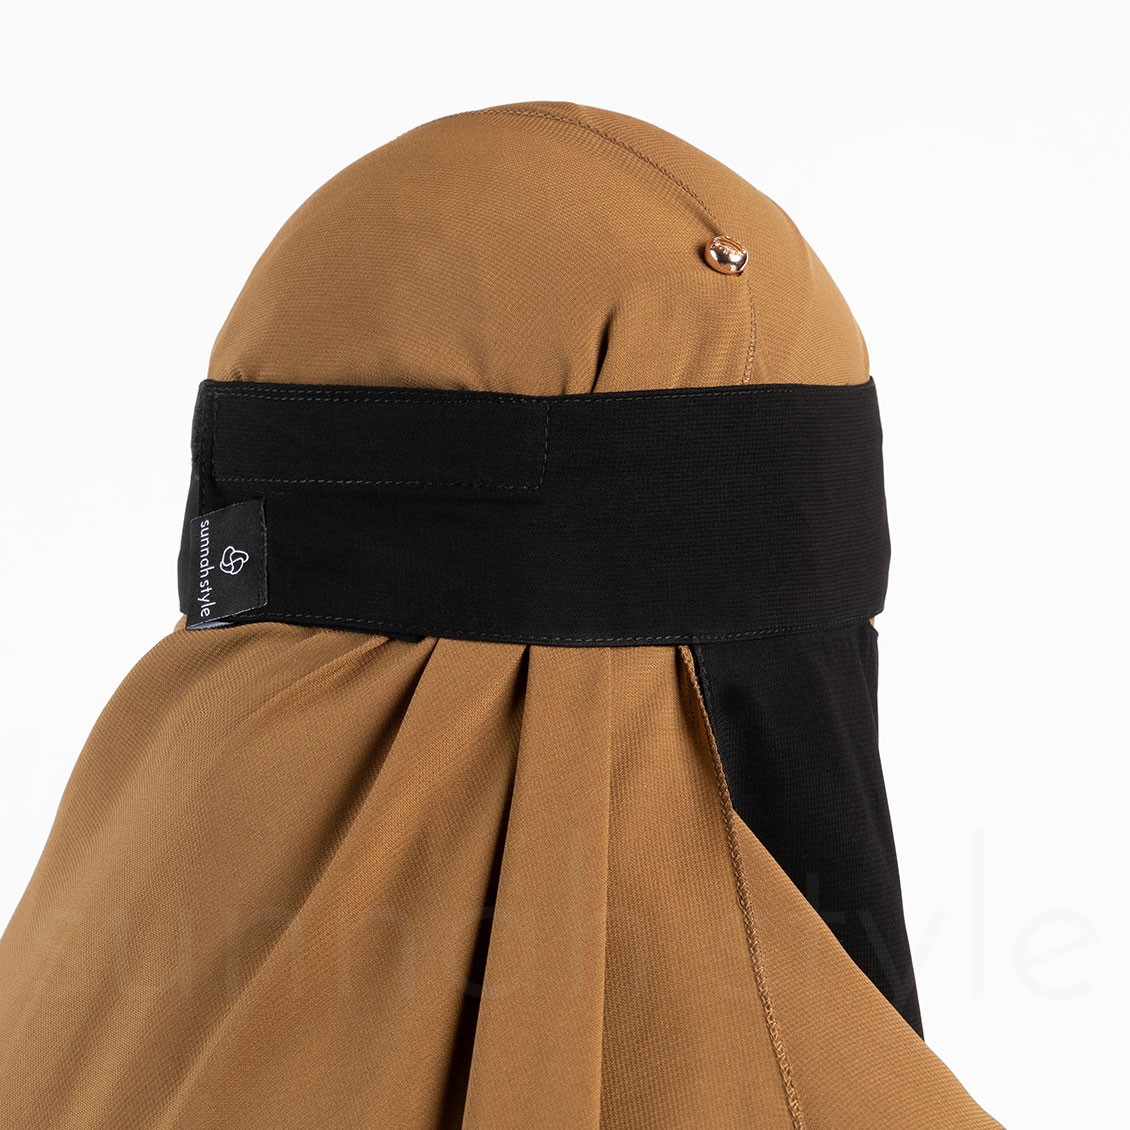 Sunnah Style One Layer Velcro Niqab Black